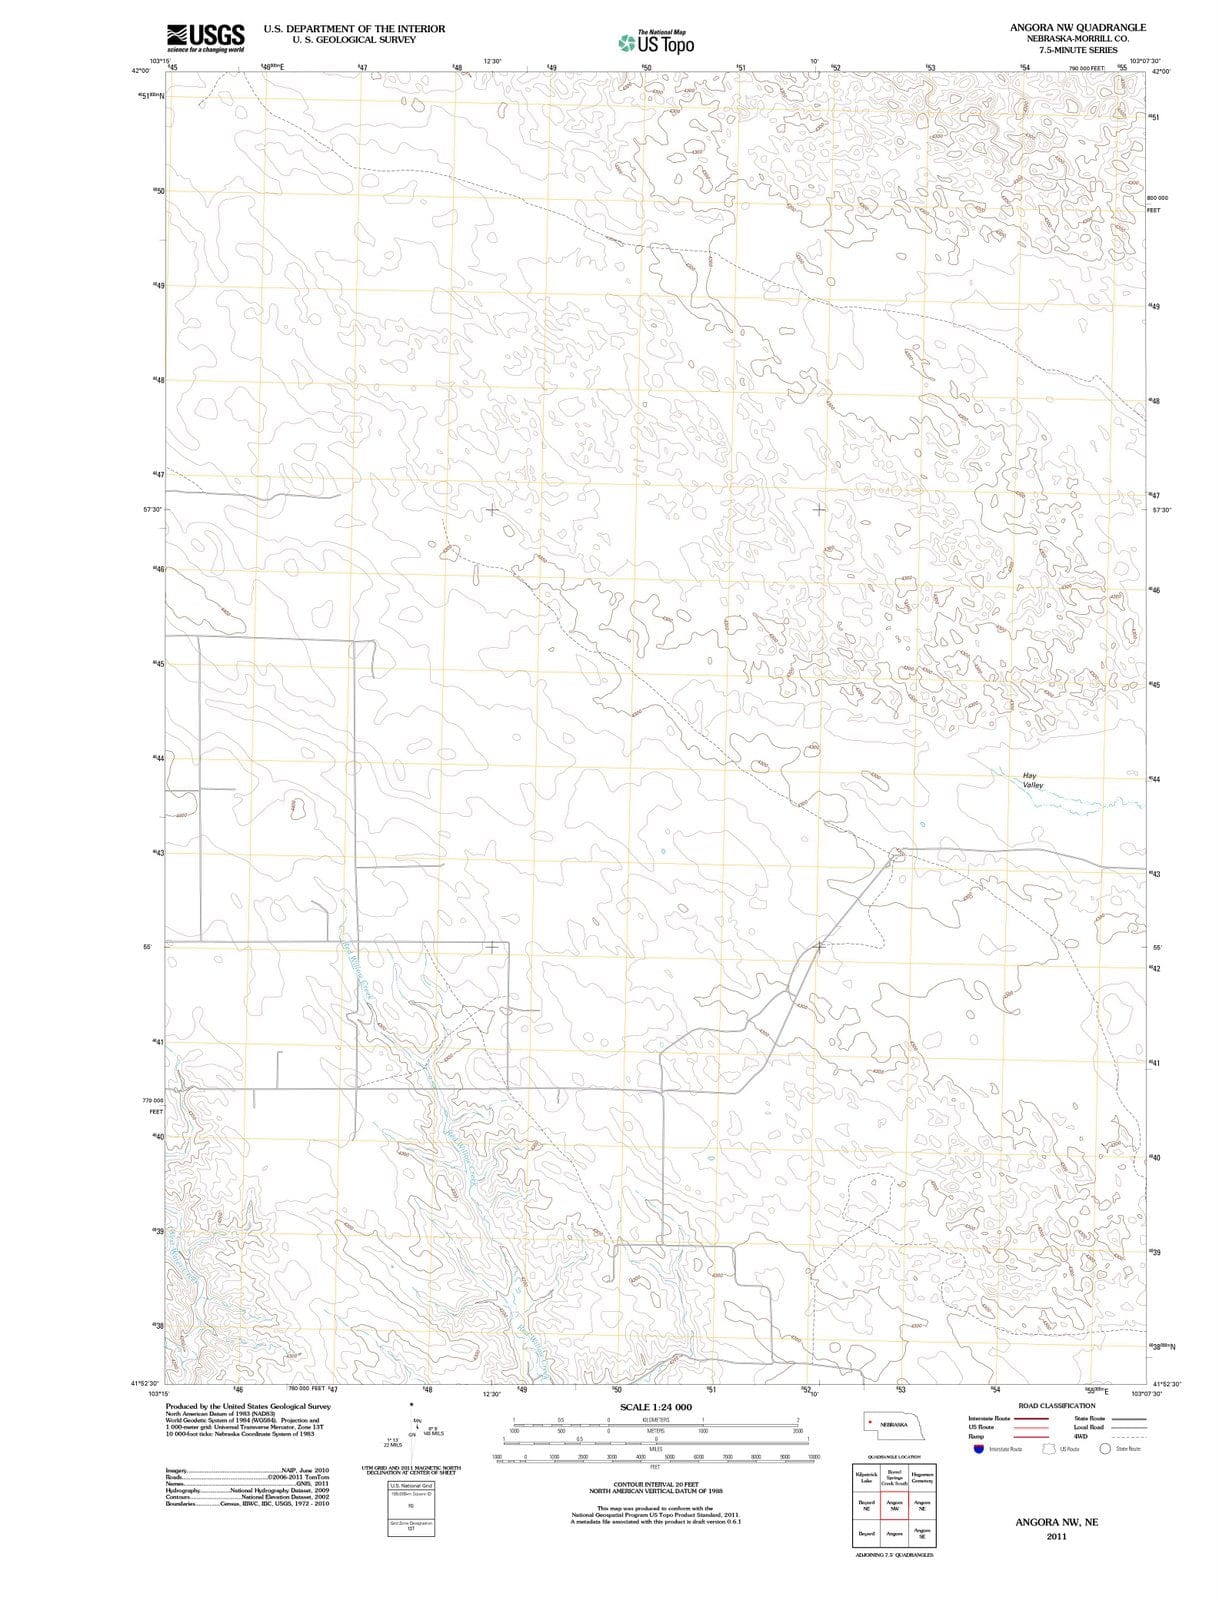 2011 Angora, NE - Nebraska - USGS Topographic Map v3